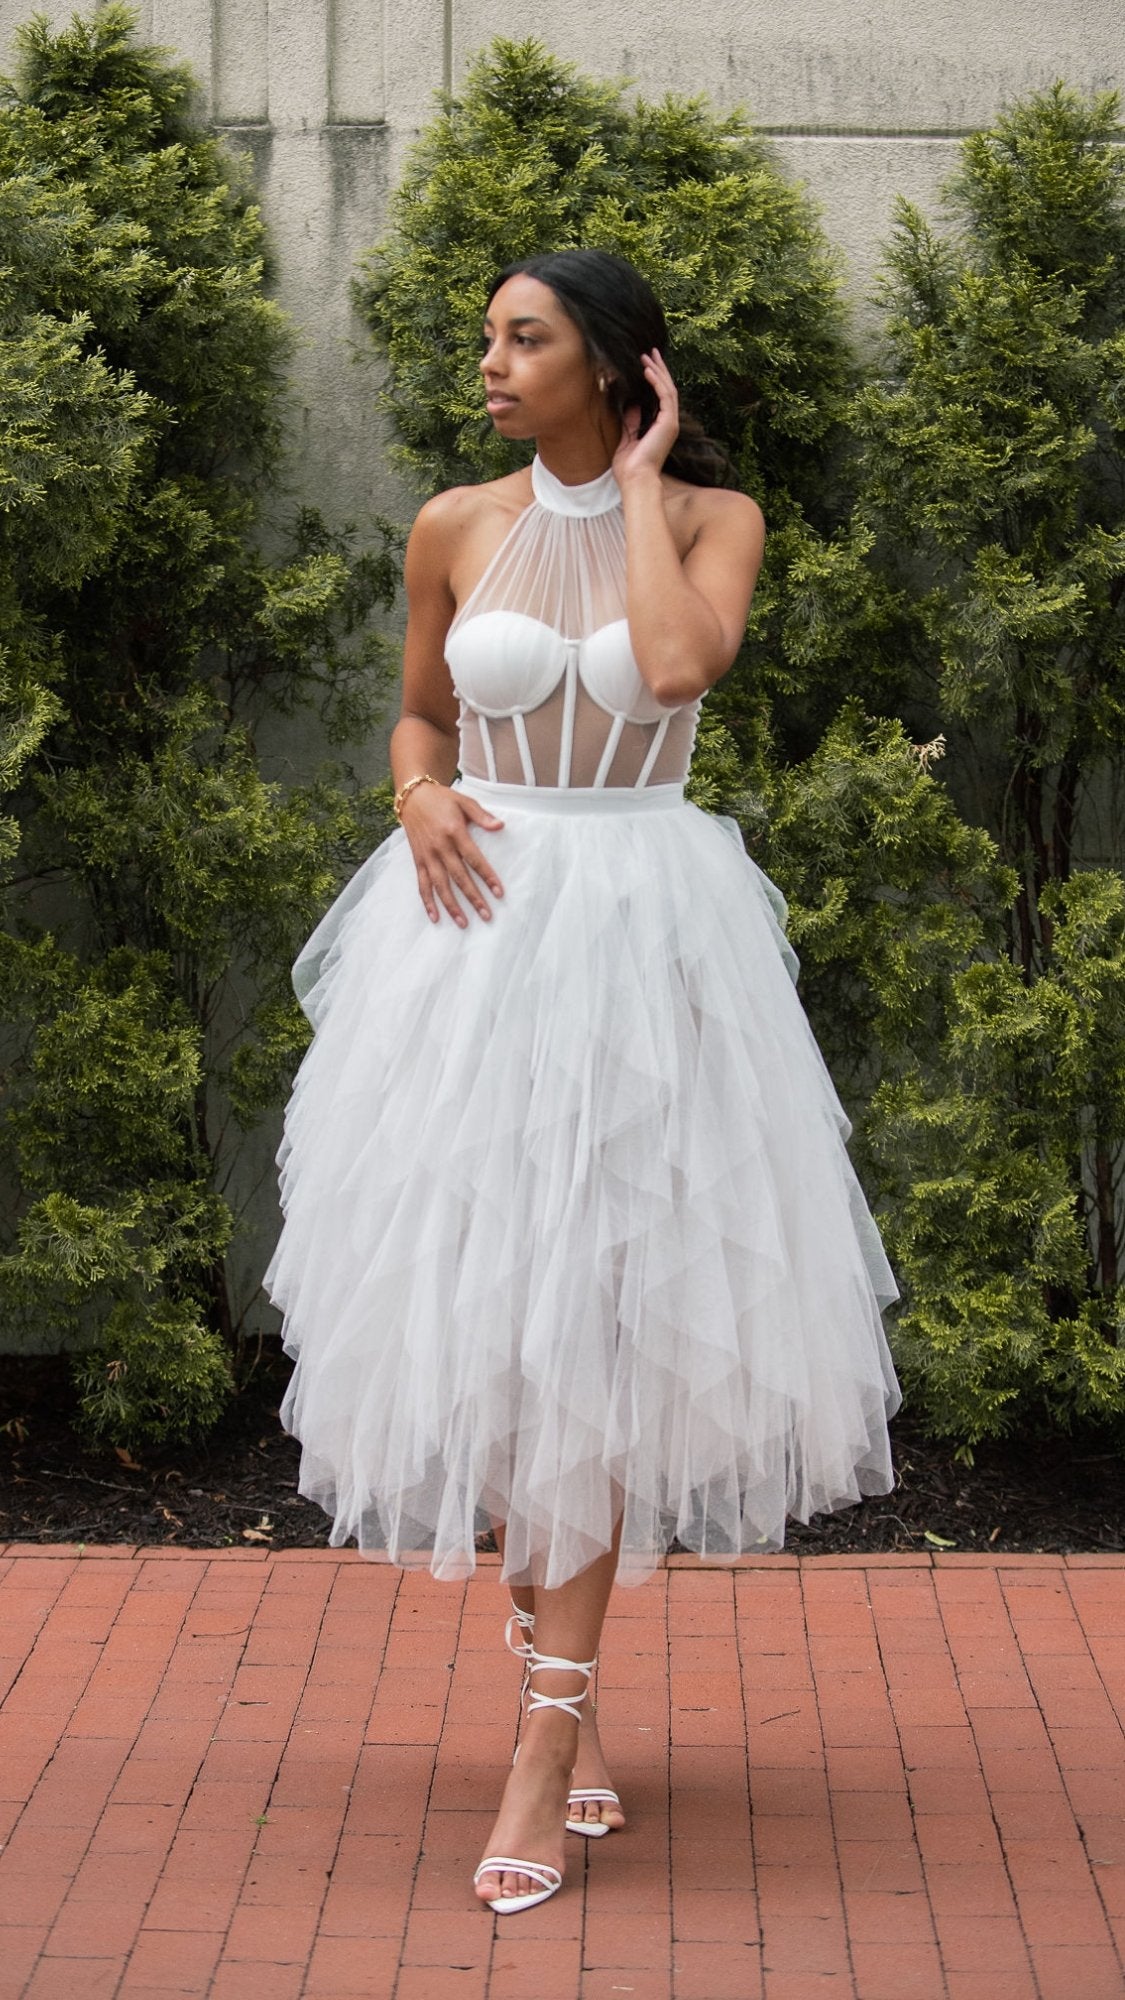 Crystal White Fairy Dress - Very Ashley